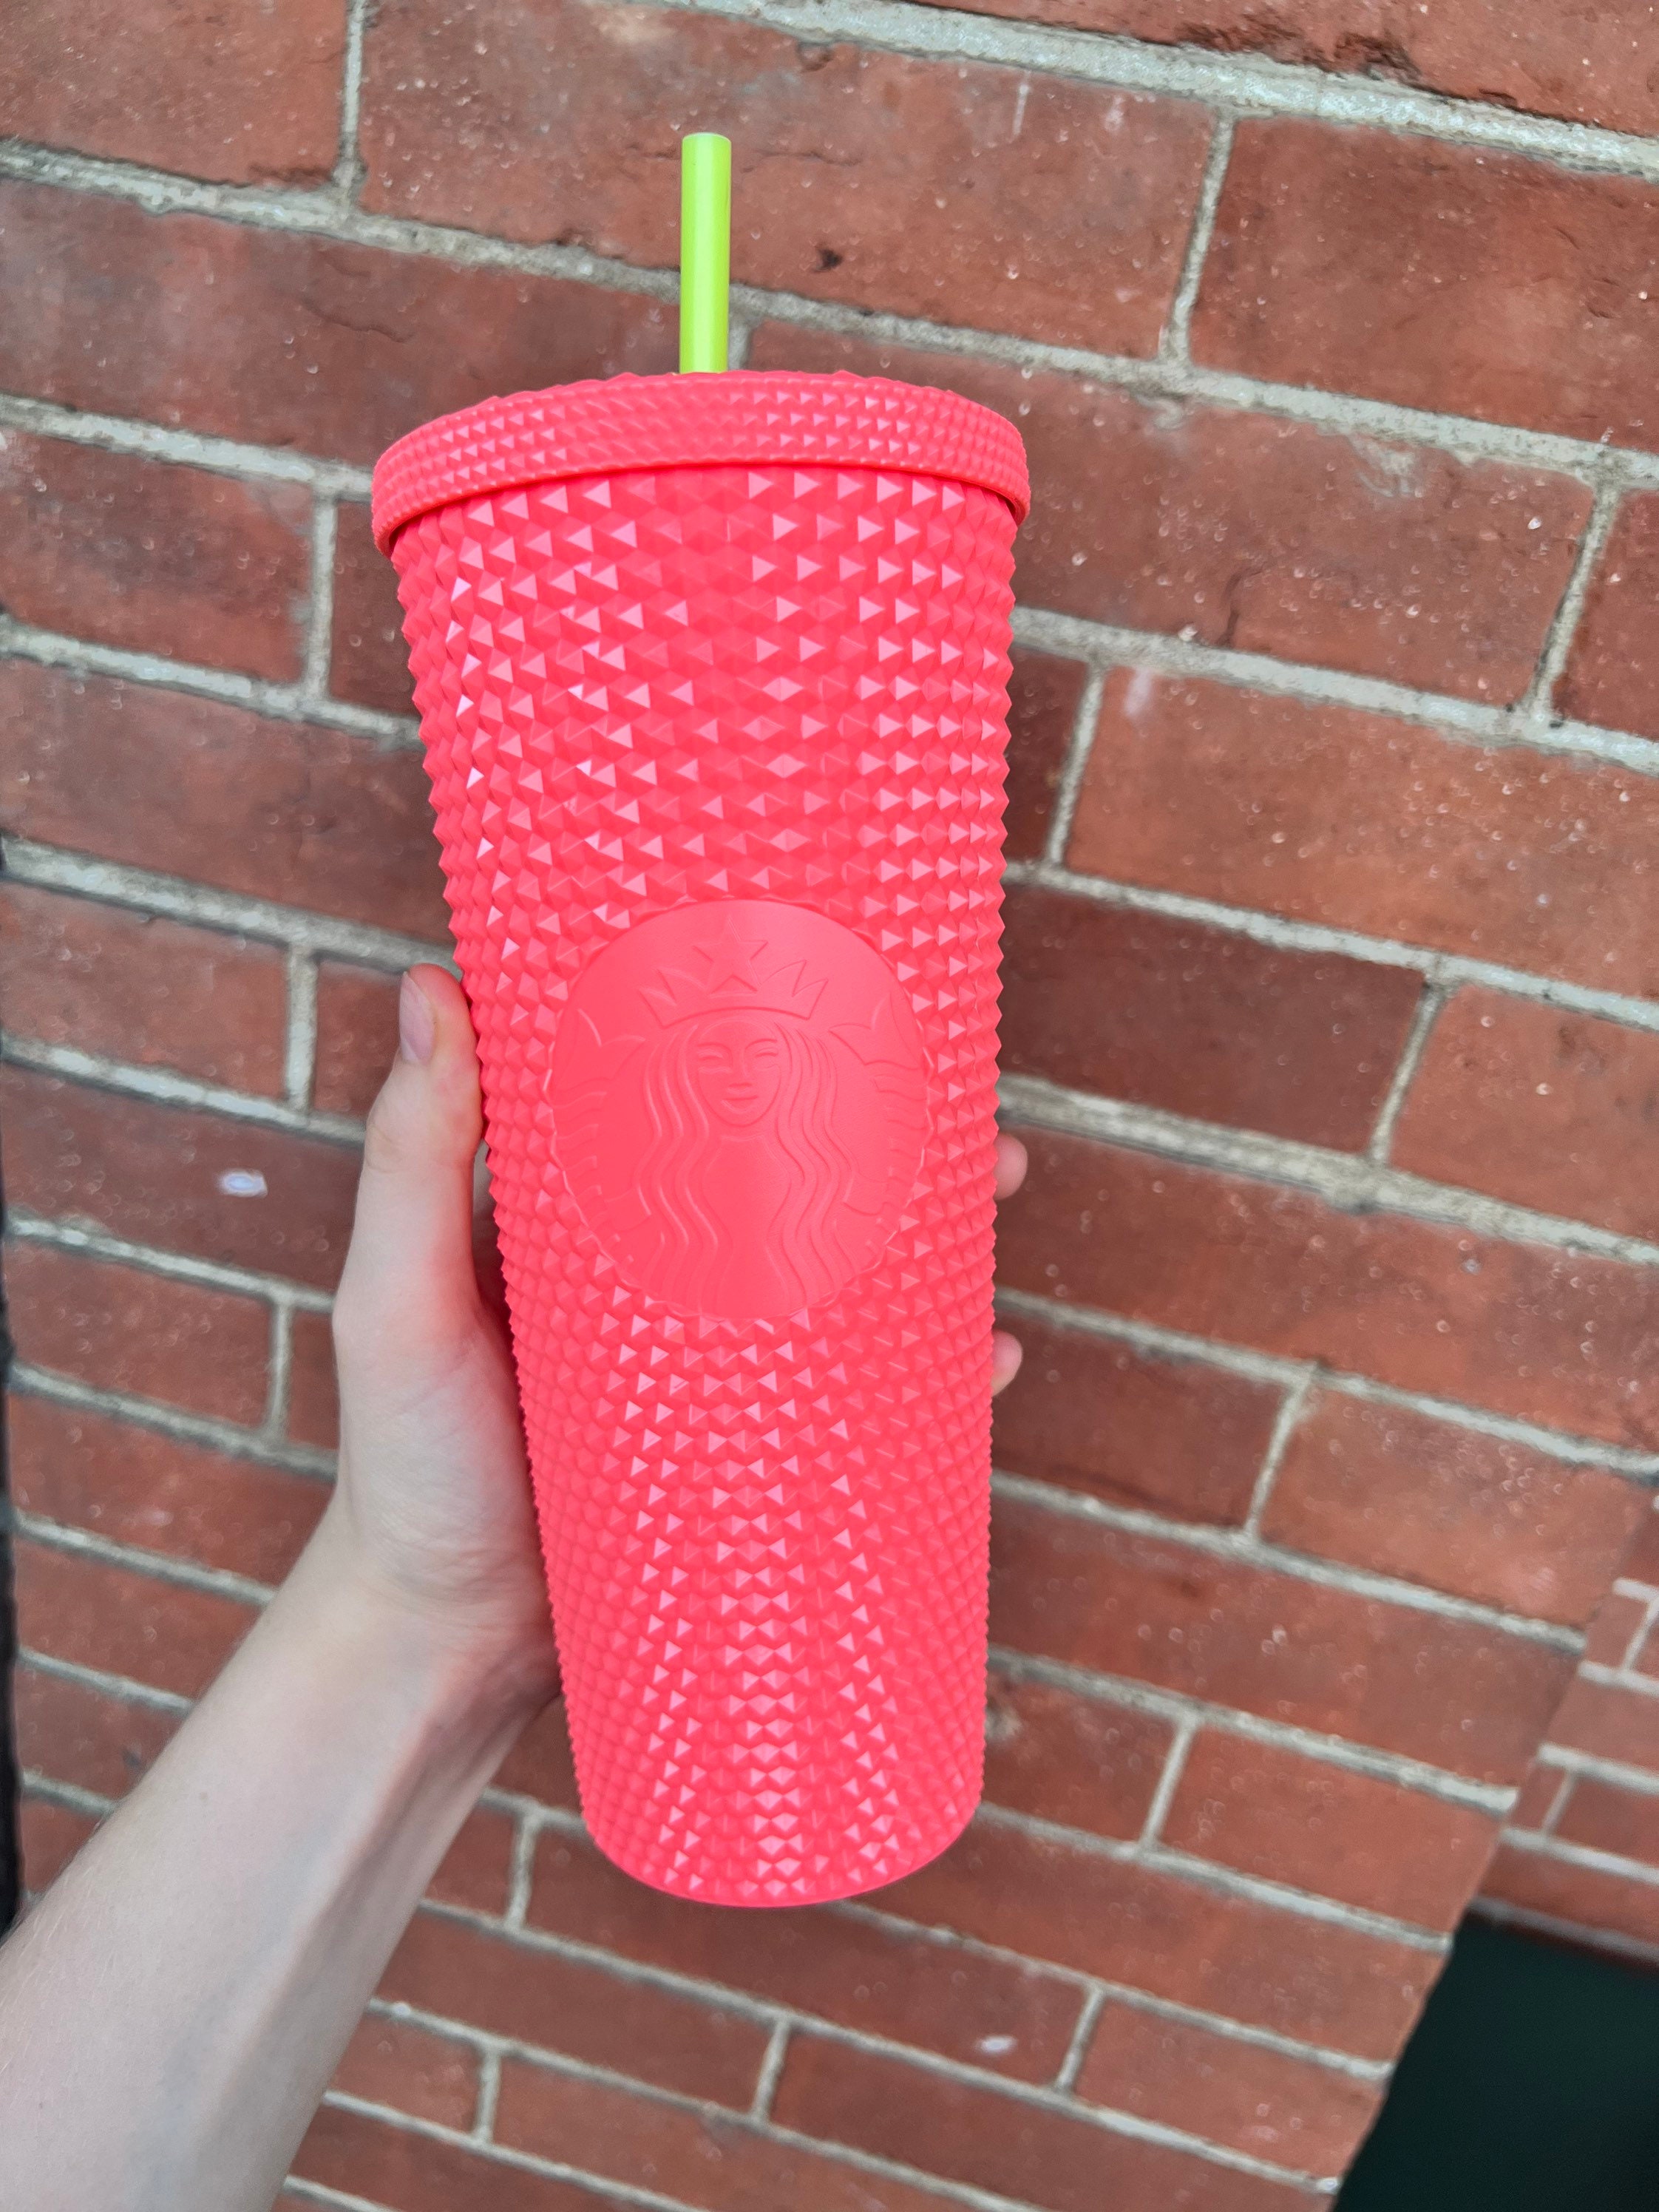 Dragonfly cup. Starbucks cold cup. – Mz Megz Designz